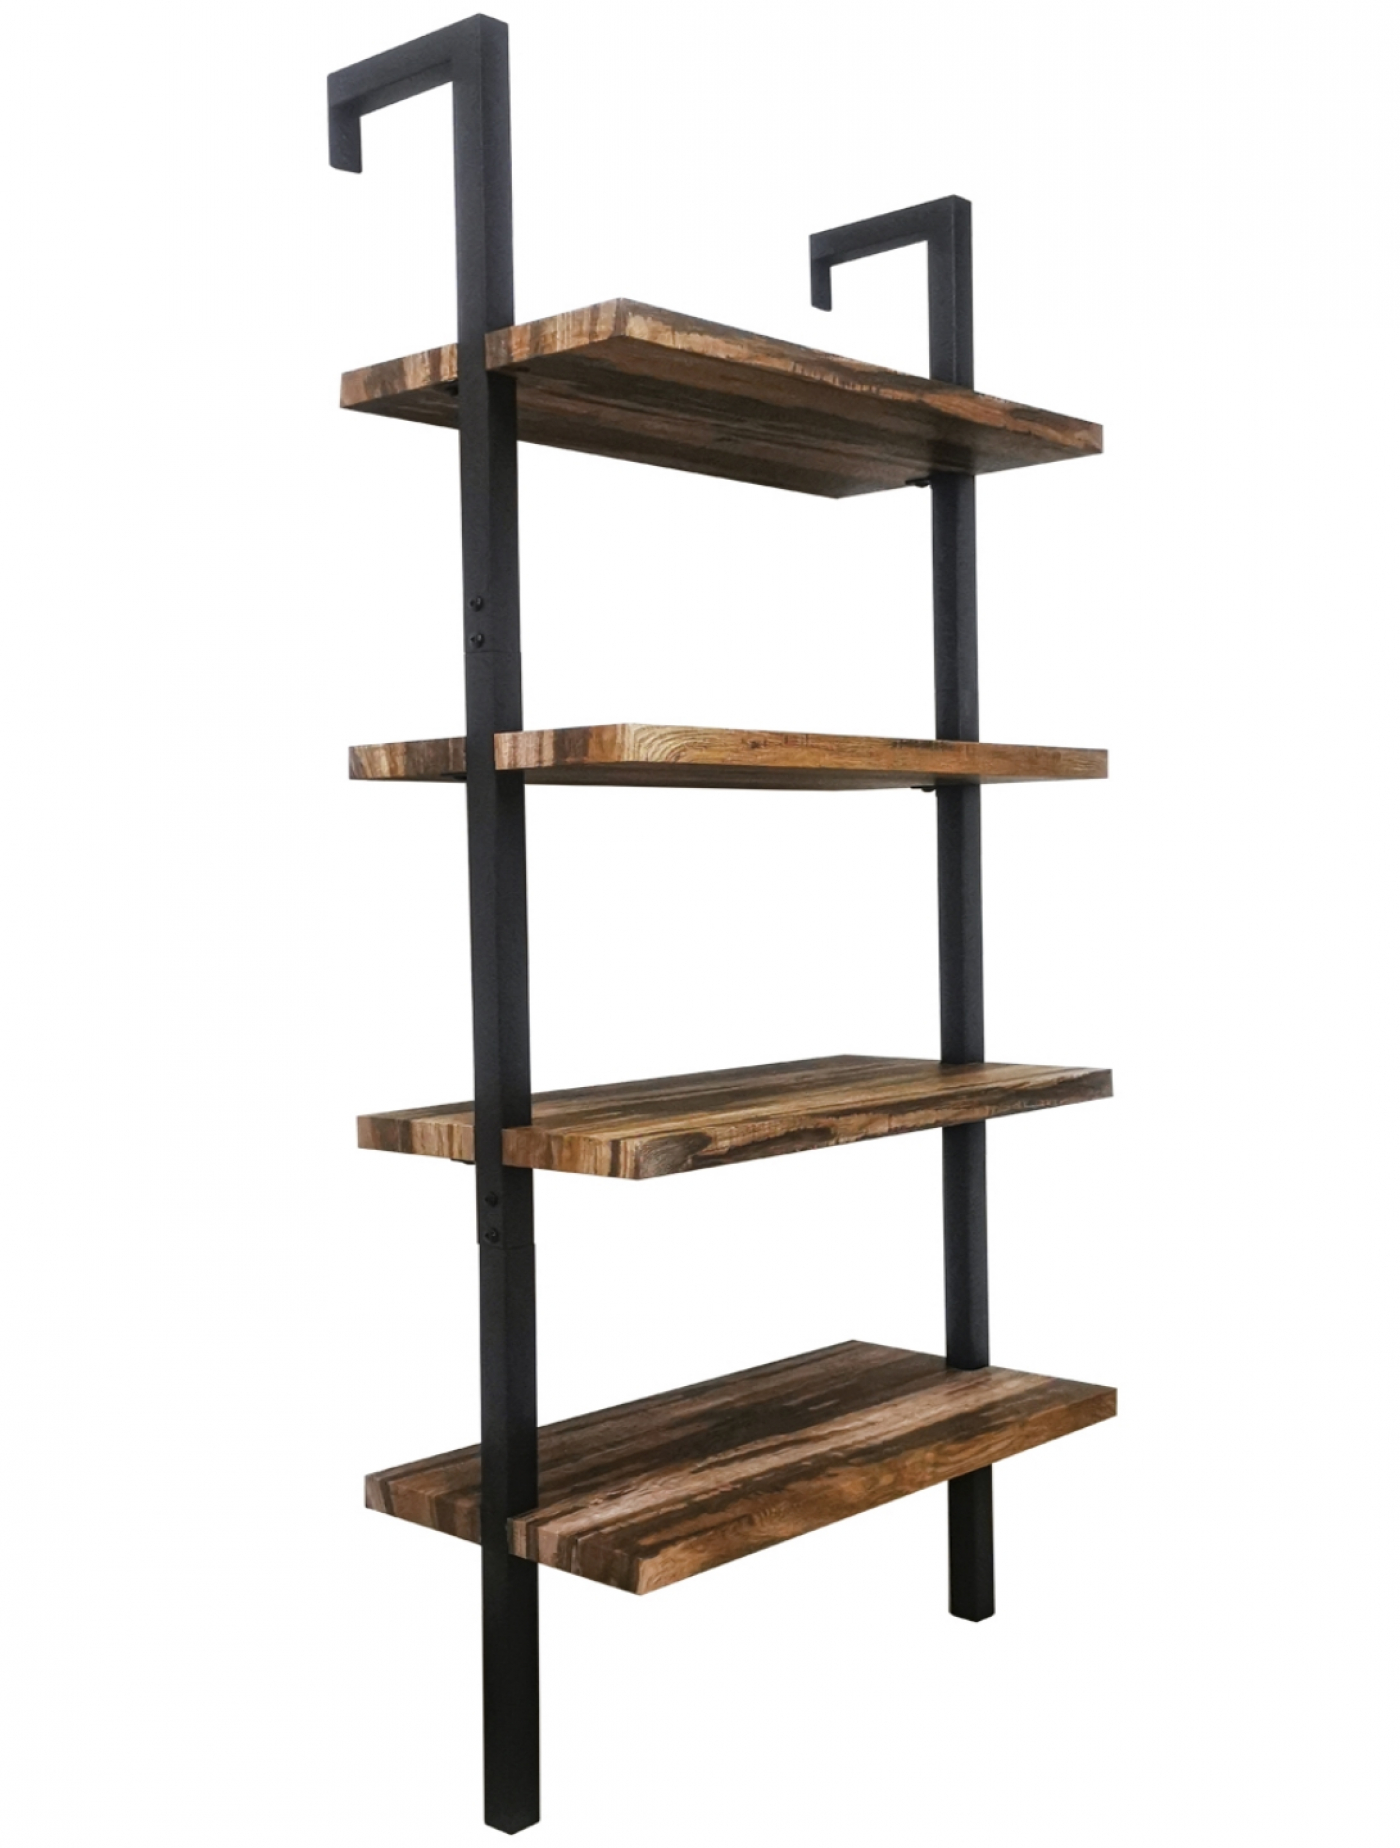 Demonteer Stam Uittreksel Wandkast wandrek ladder Stoer metaal hout industrieel design open boekenkast  152 cm hoog zwart - Meubel Plein